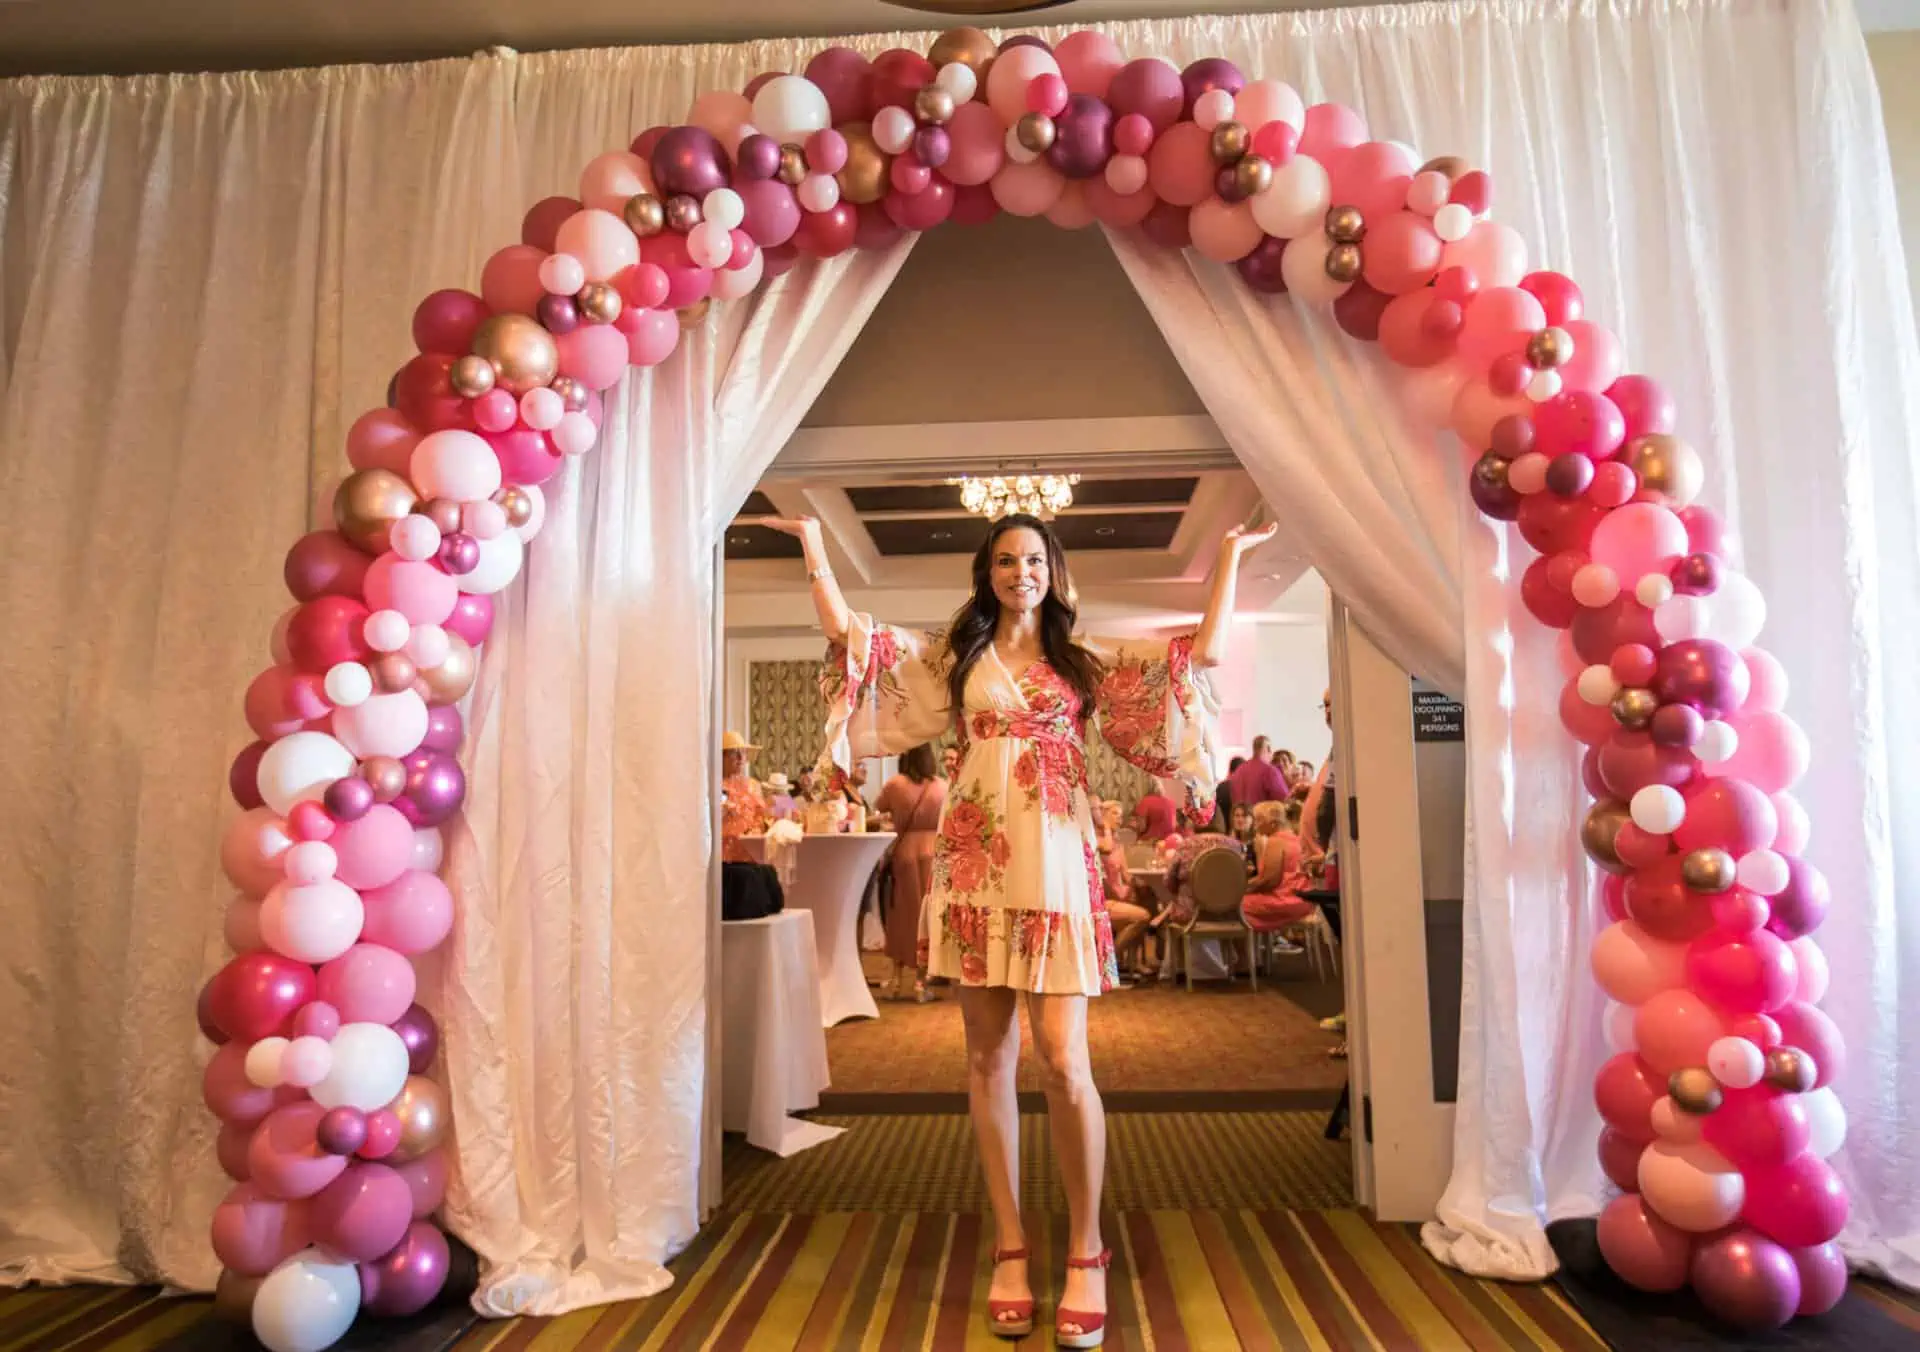 A woman stands below a pink balloon arch